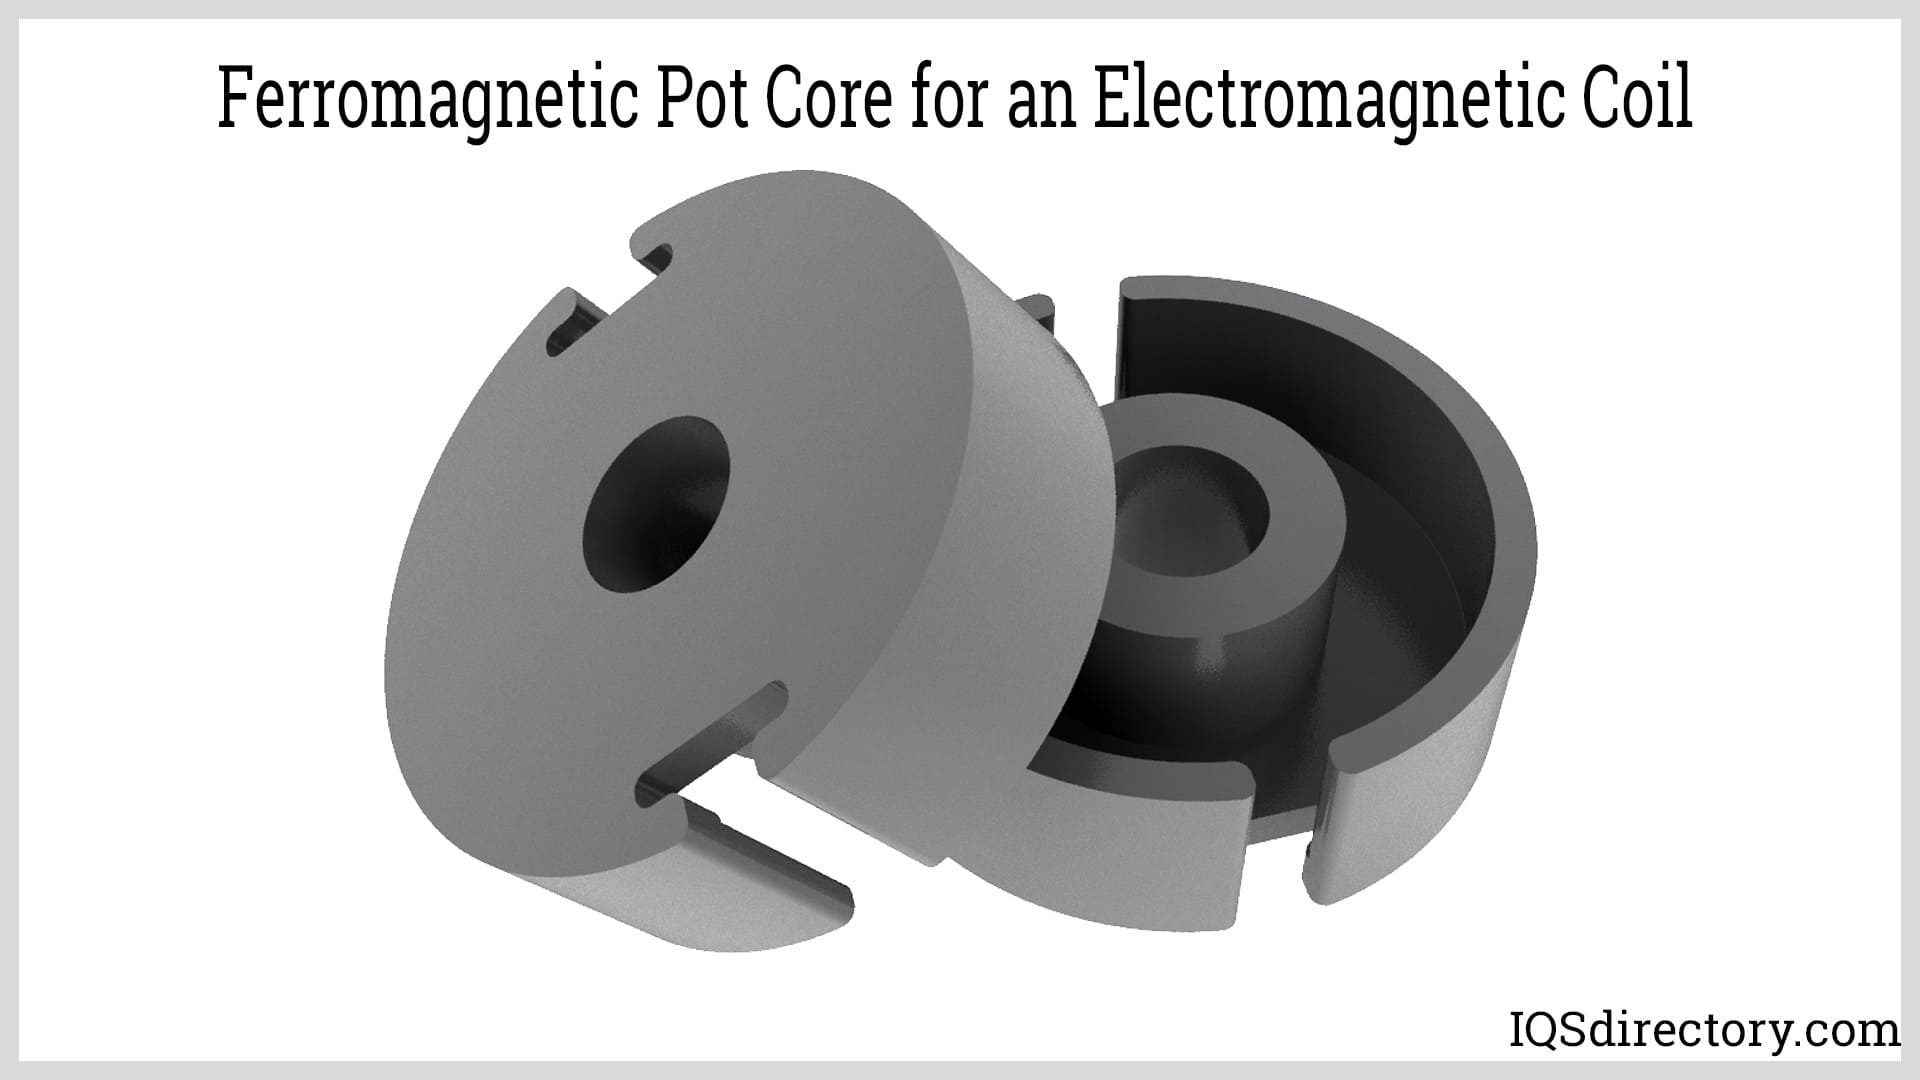 Ferromagnetic Pot Core for an Electromagnetic Coil